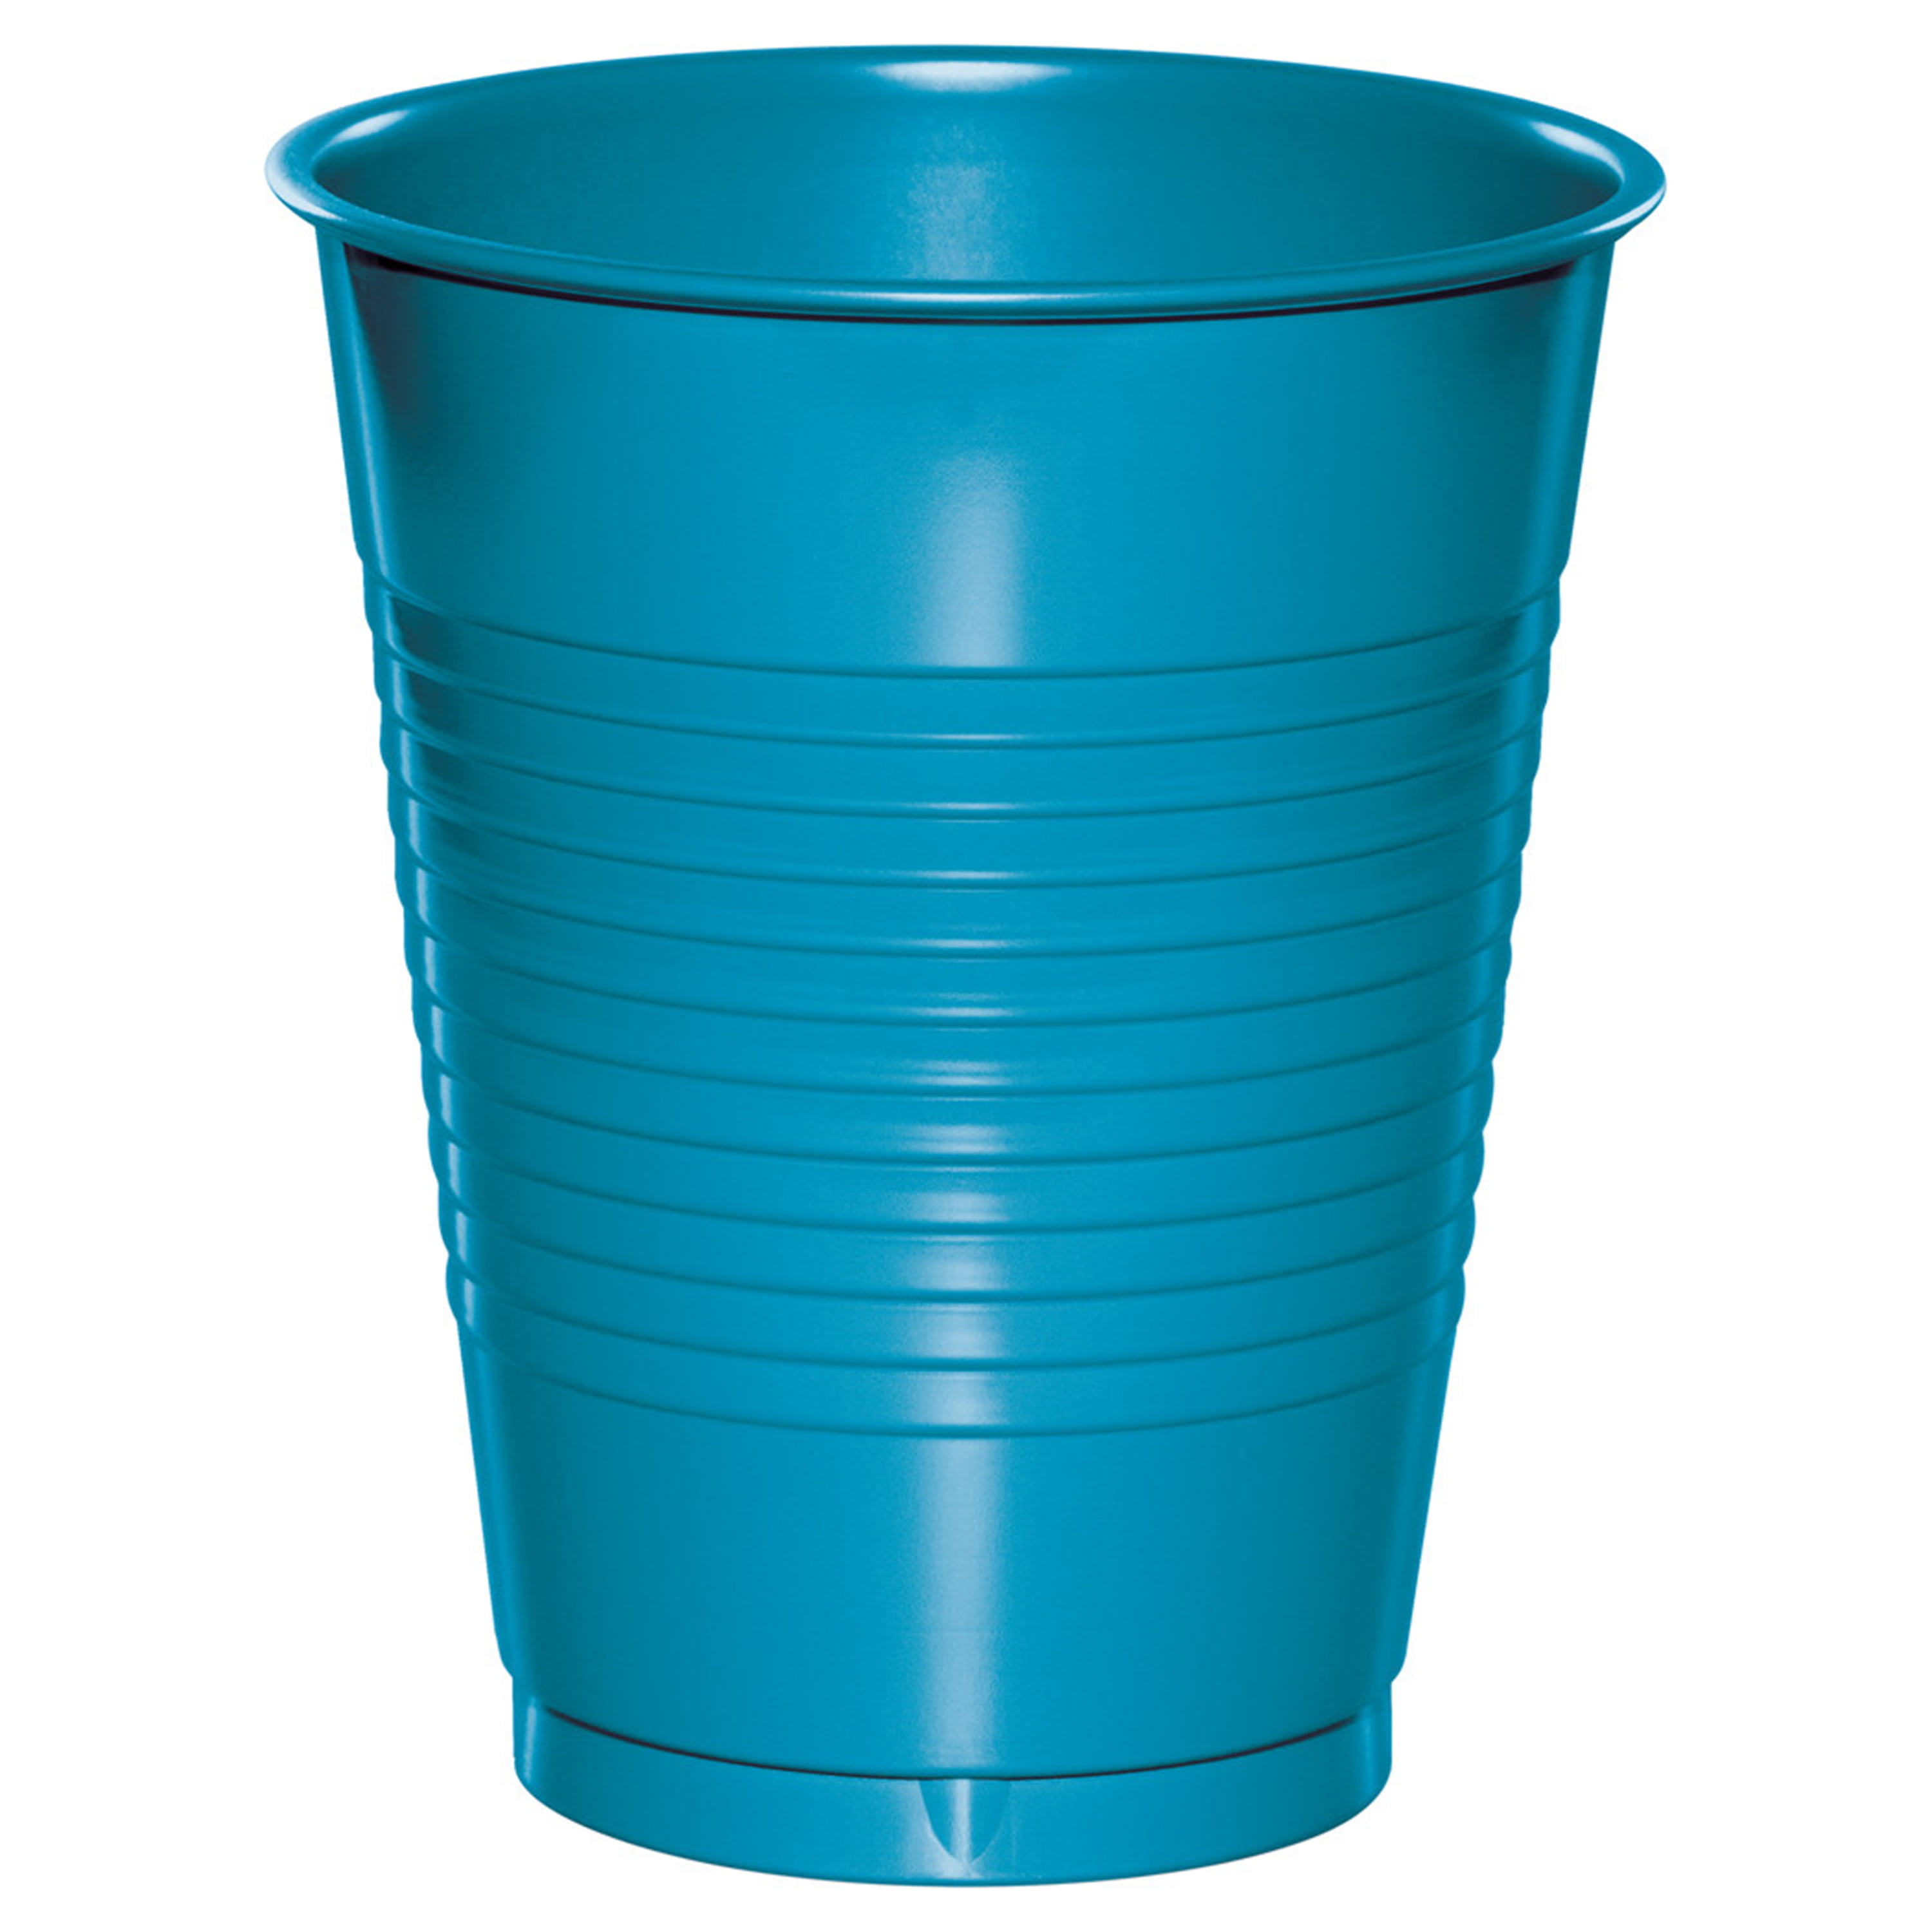 Creative Converting University of Florida Plastic Cups 8 Count 20 oz-8 pcs Orange/Blue Pack of 1 